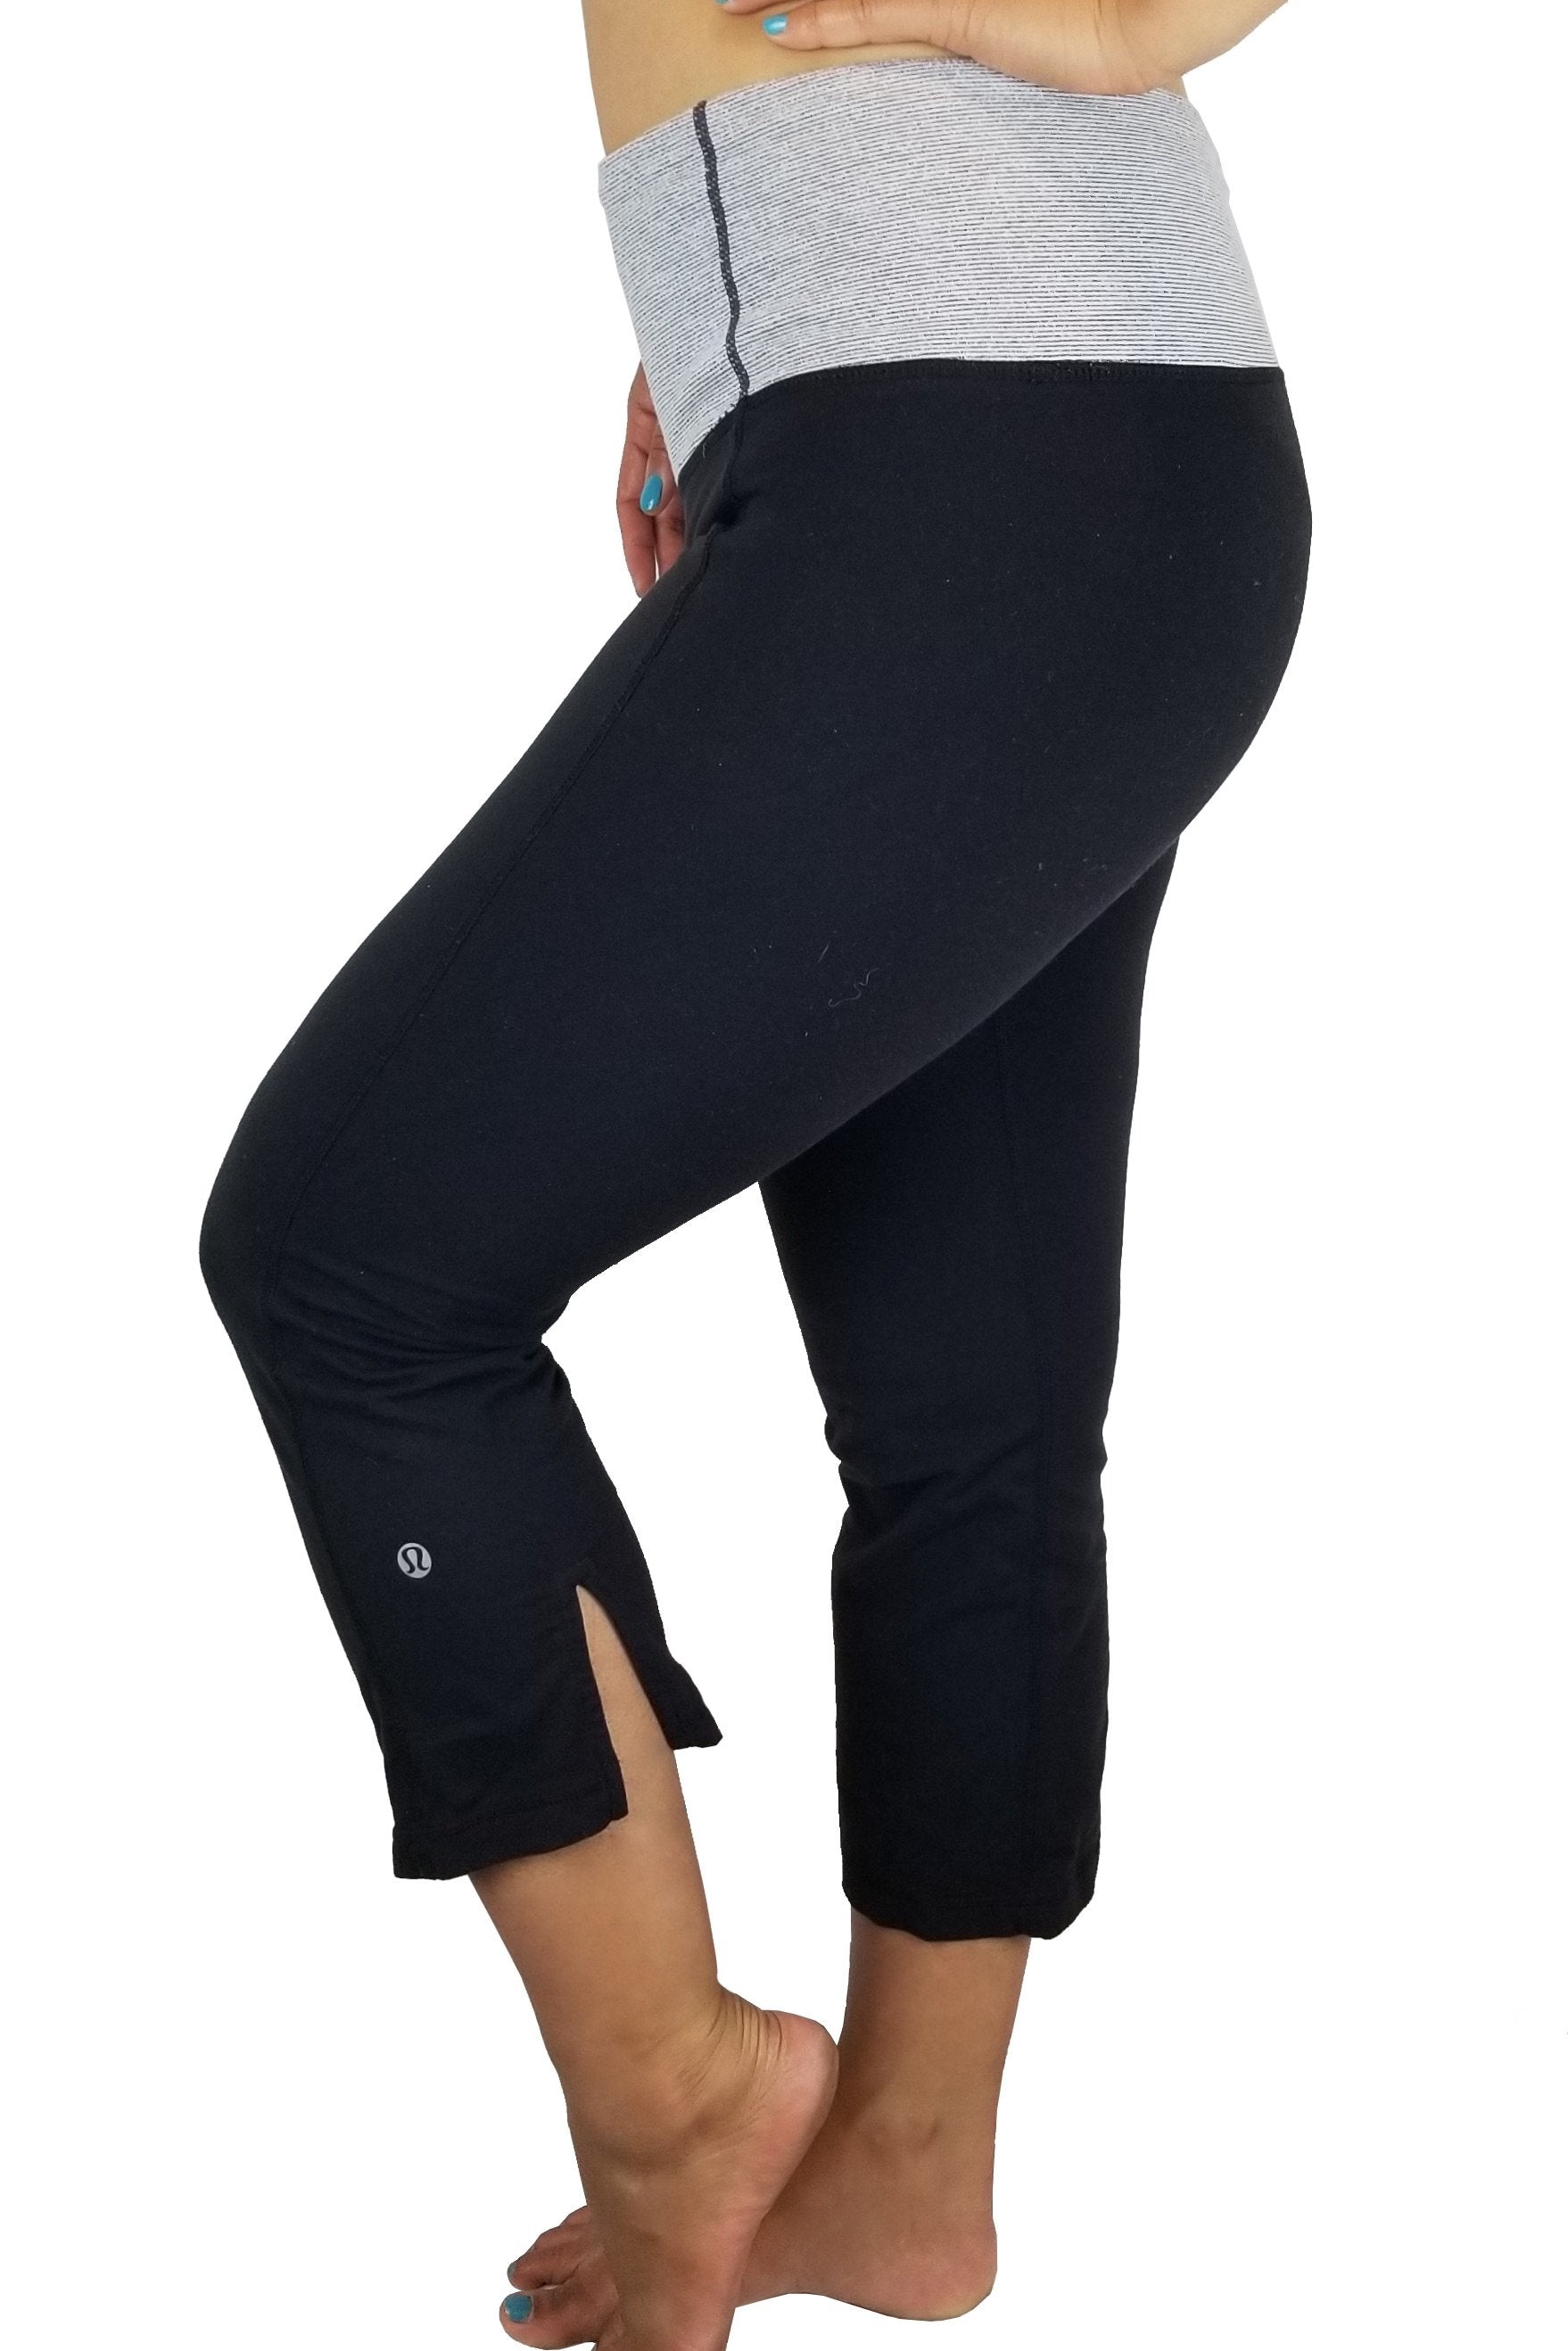 Lululemon Women's Groove Pants size 6